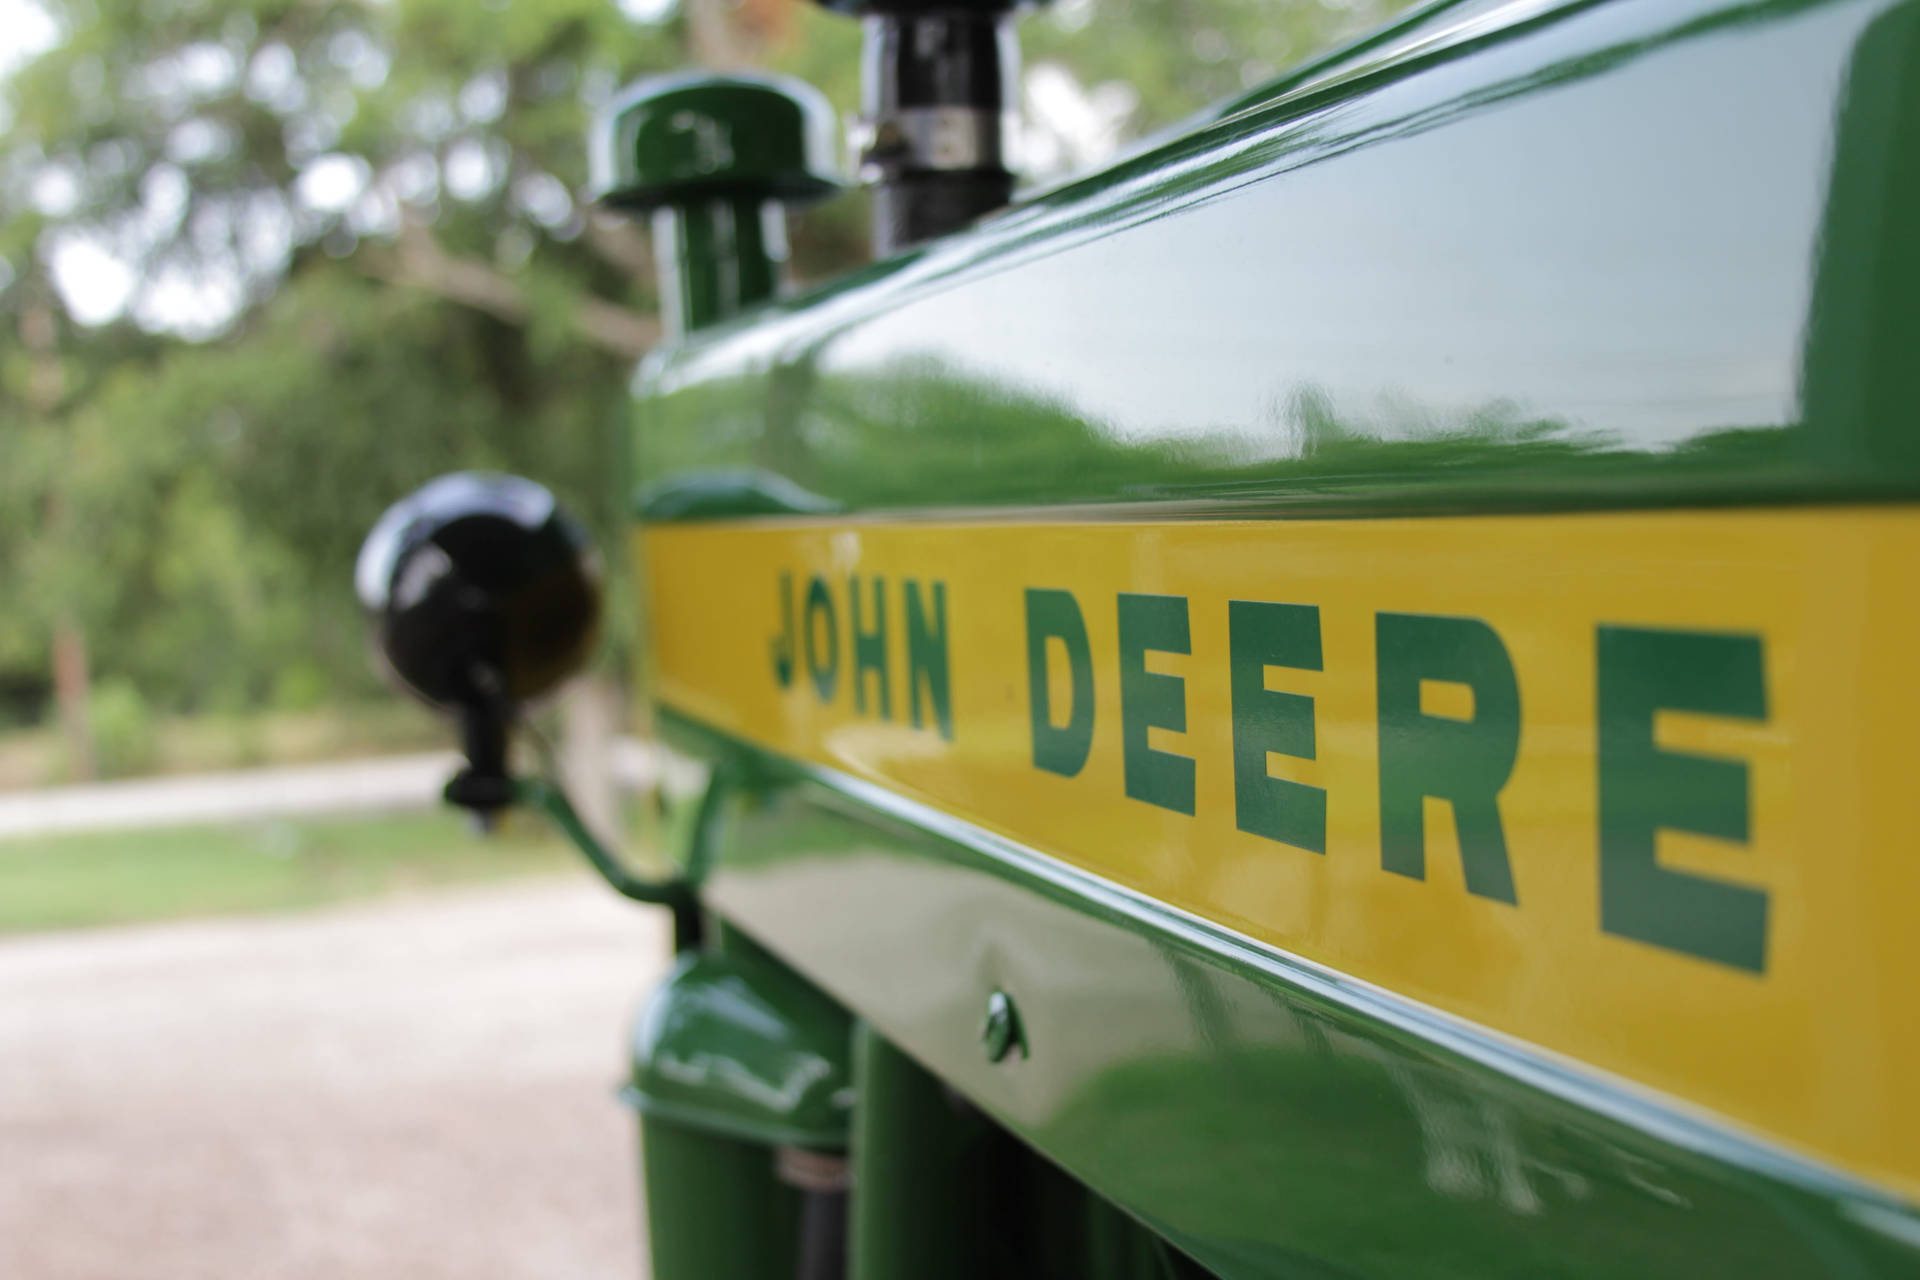 John Deere Tractor Close Up